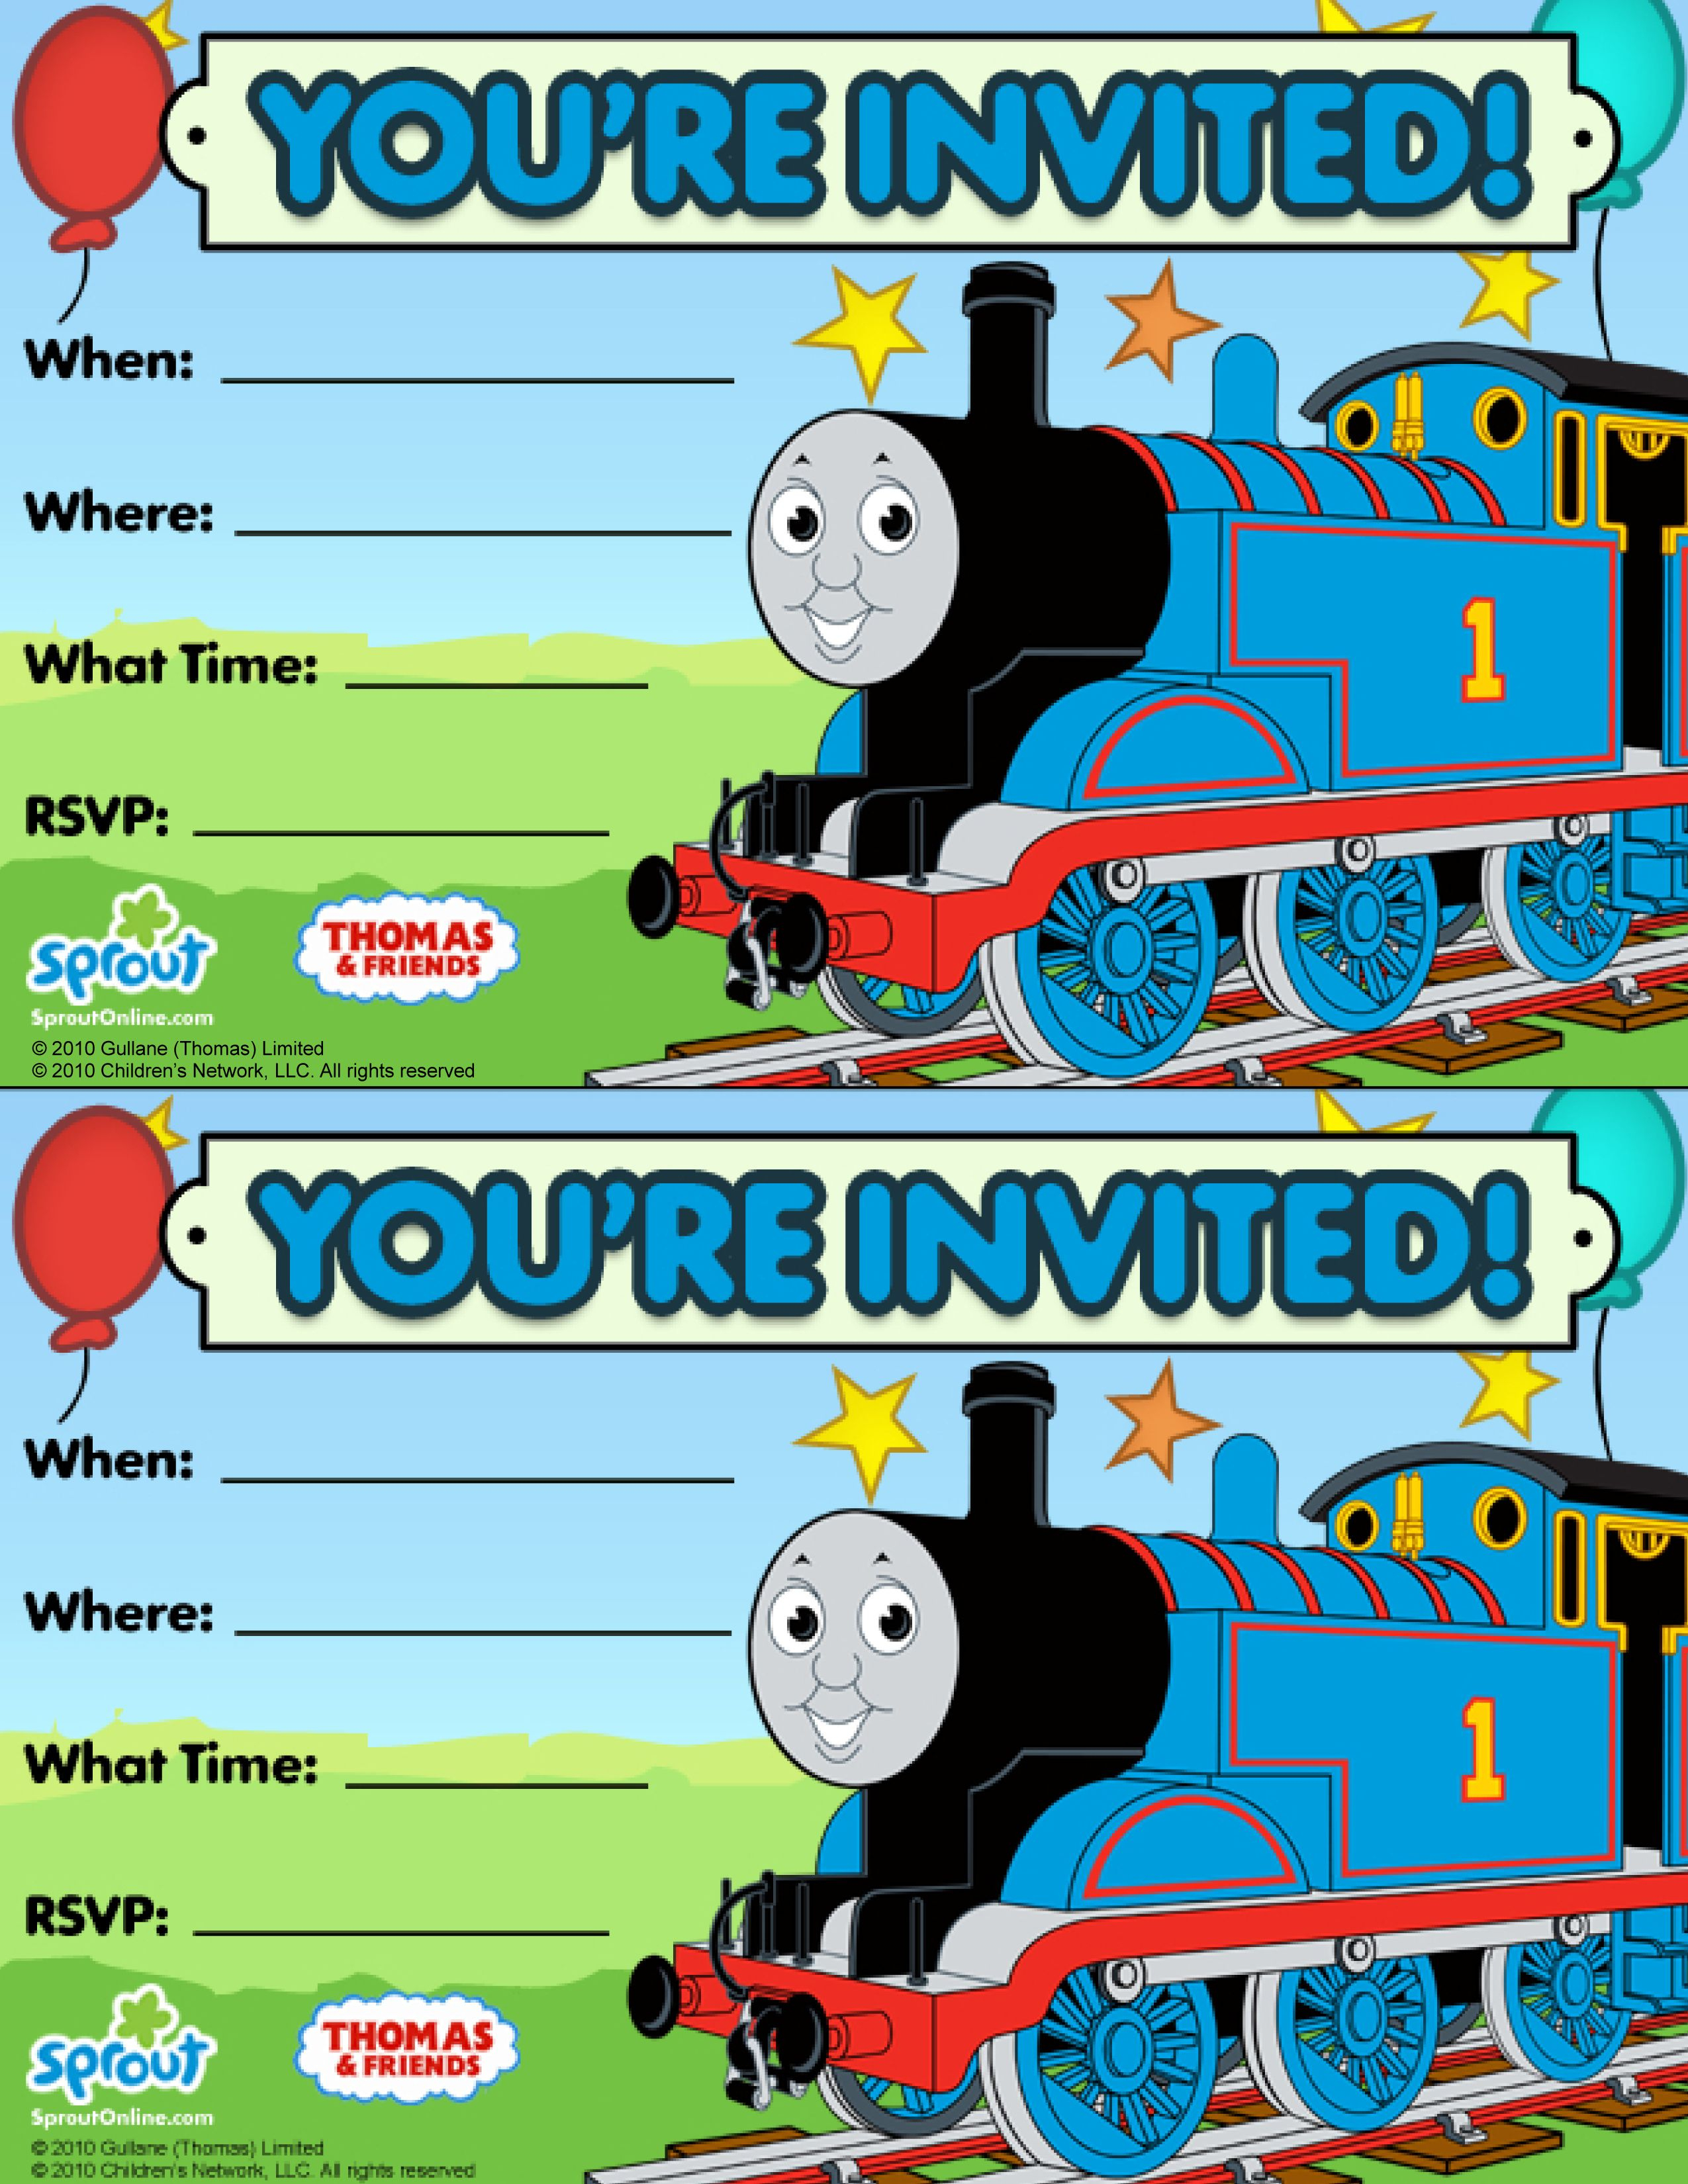 Thomas &amp;amp; Friends Party Invitation: Free | Birthday Party Ideas - Thomas Invitations Printable Free